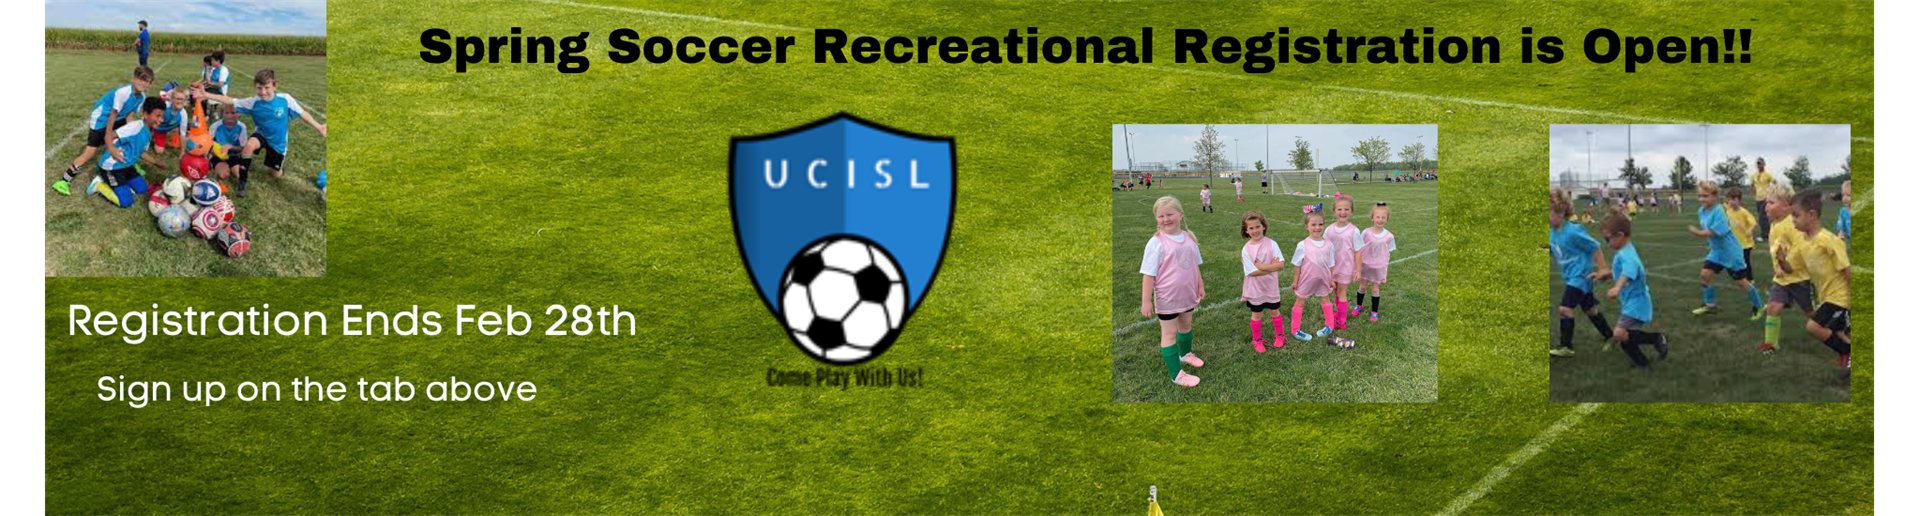 UCISL Rec Soccer Registration Open